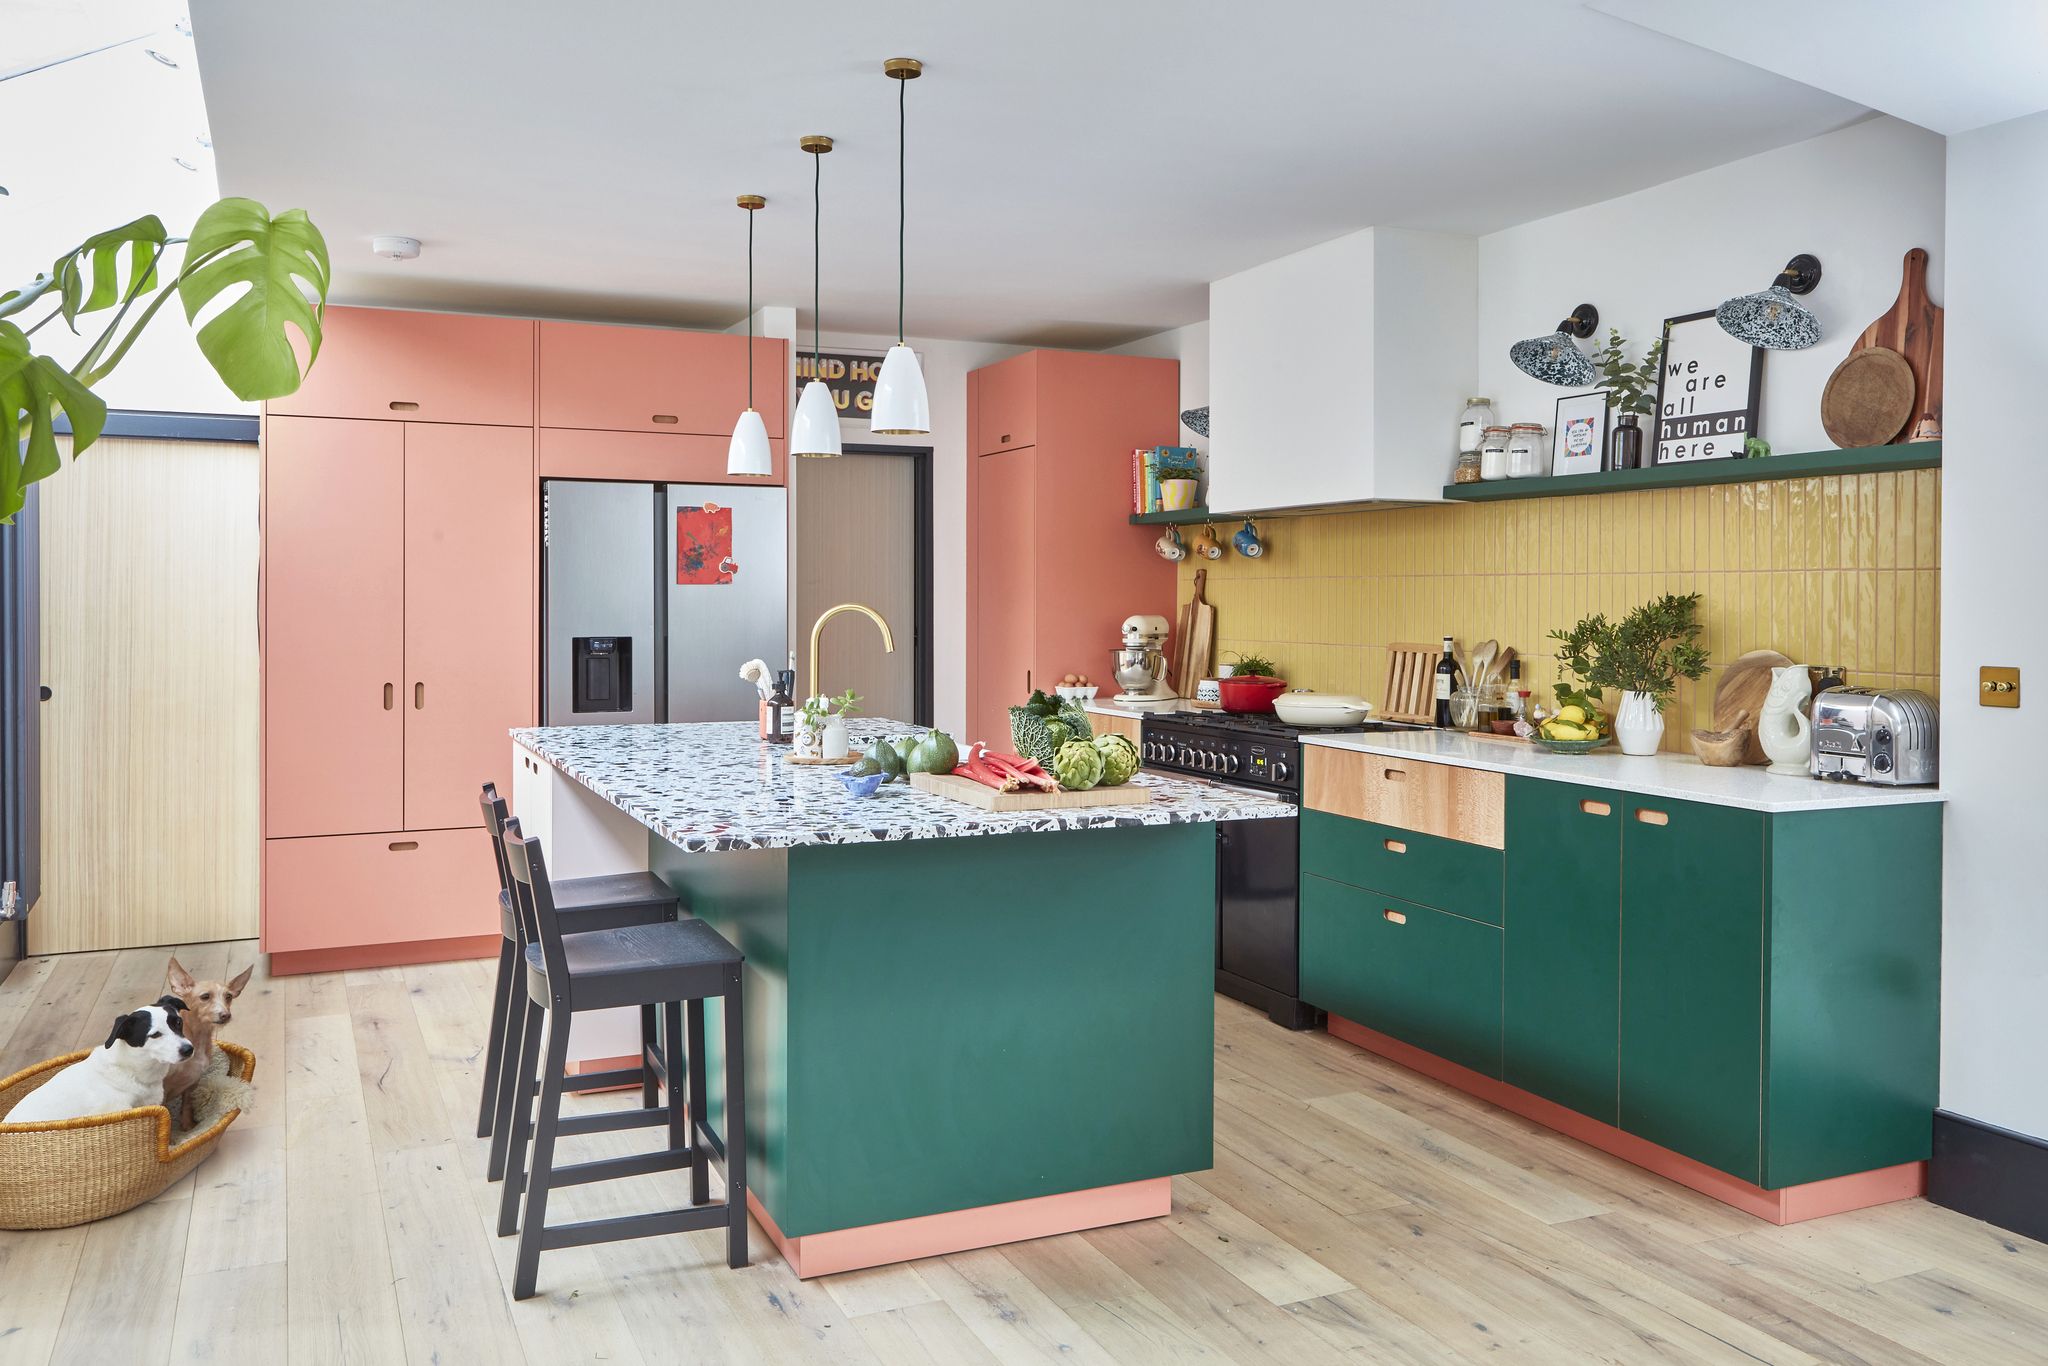 Buy Luca Gloss White Kitchen Doors at Trade Prices - DIY Kitchens